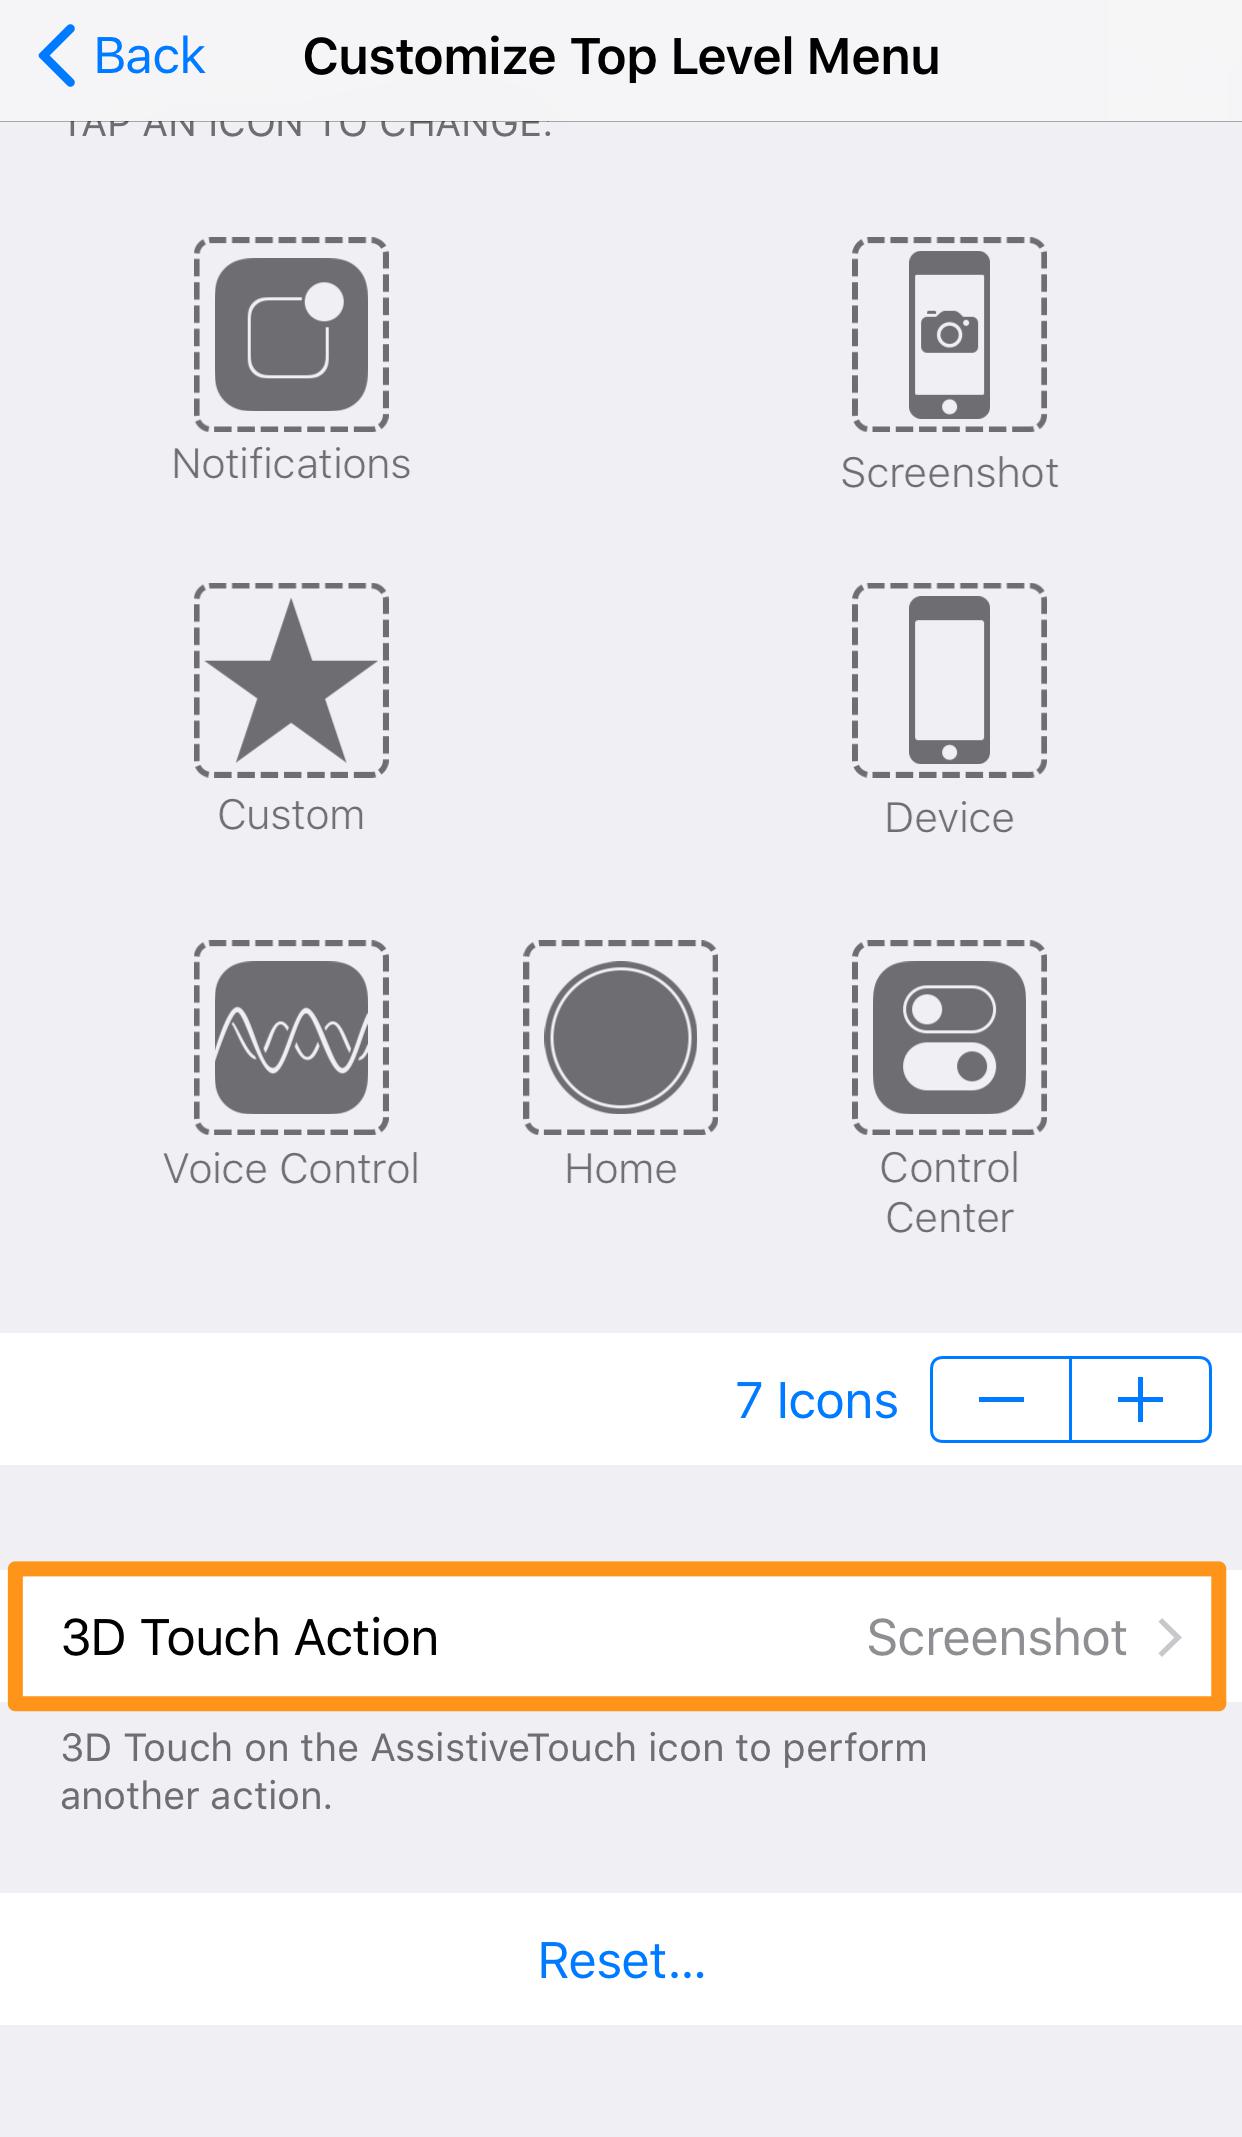 Fix iPhone Screenshot Not Working on iOS 11